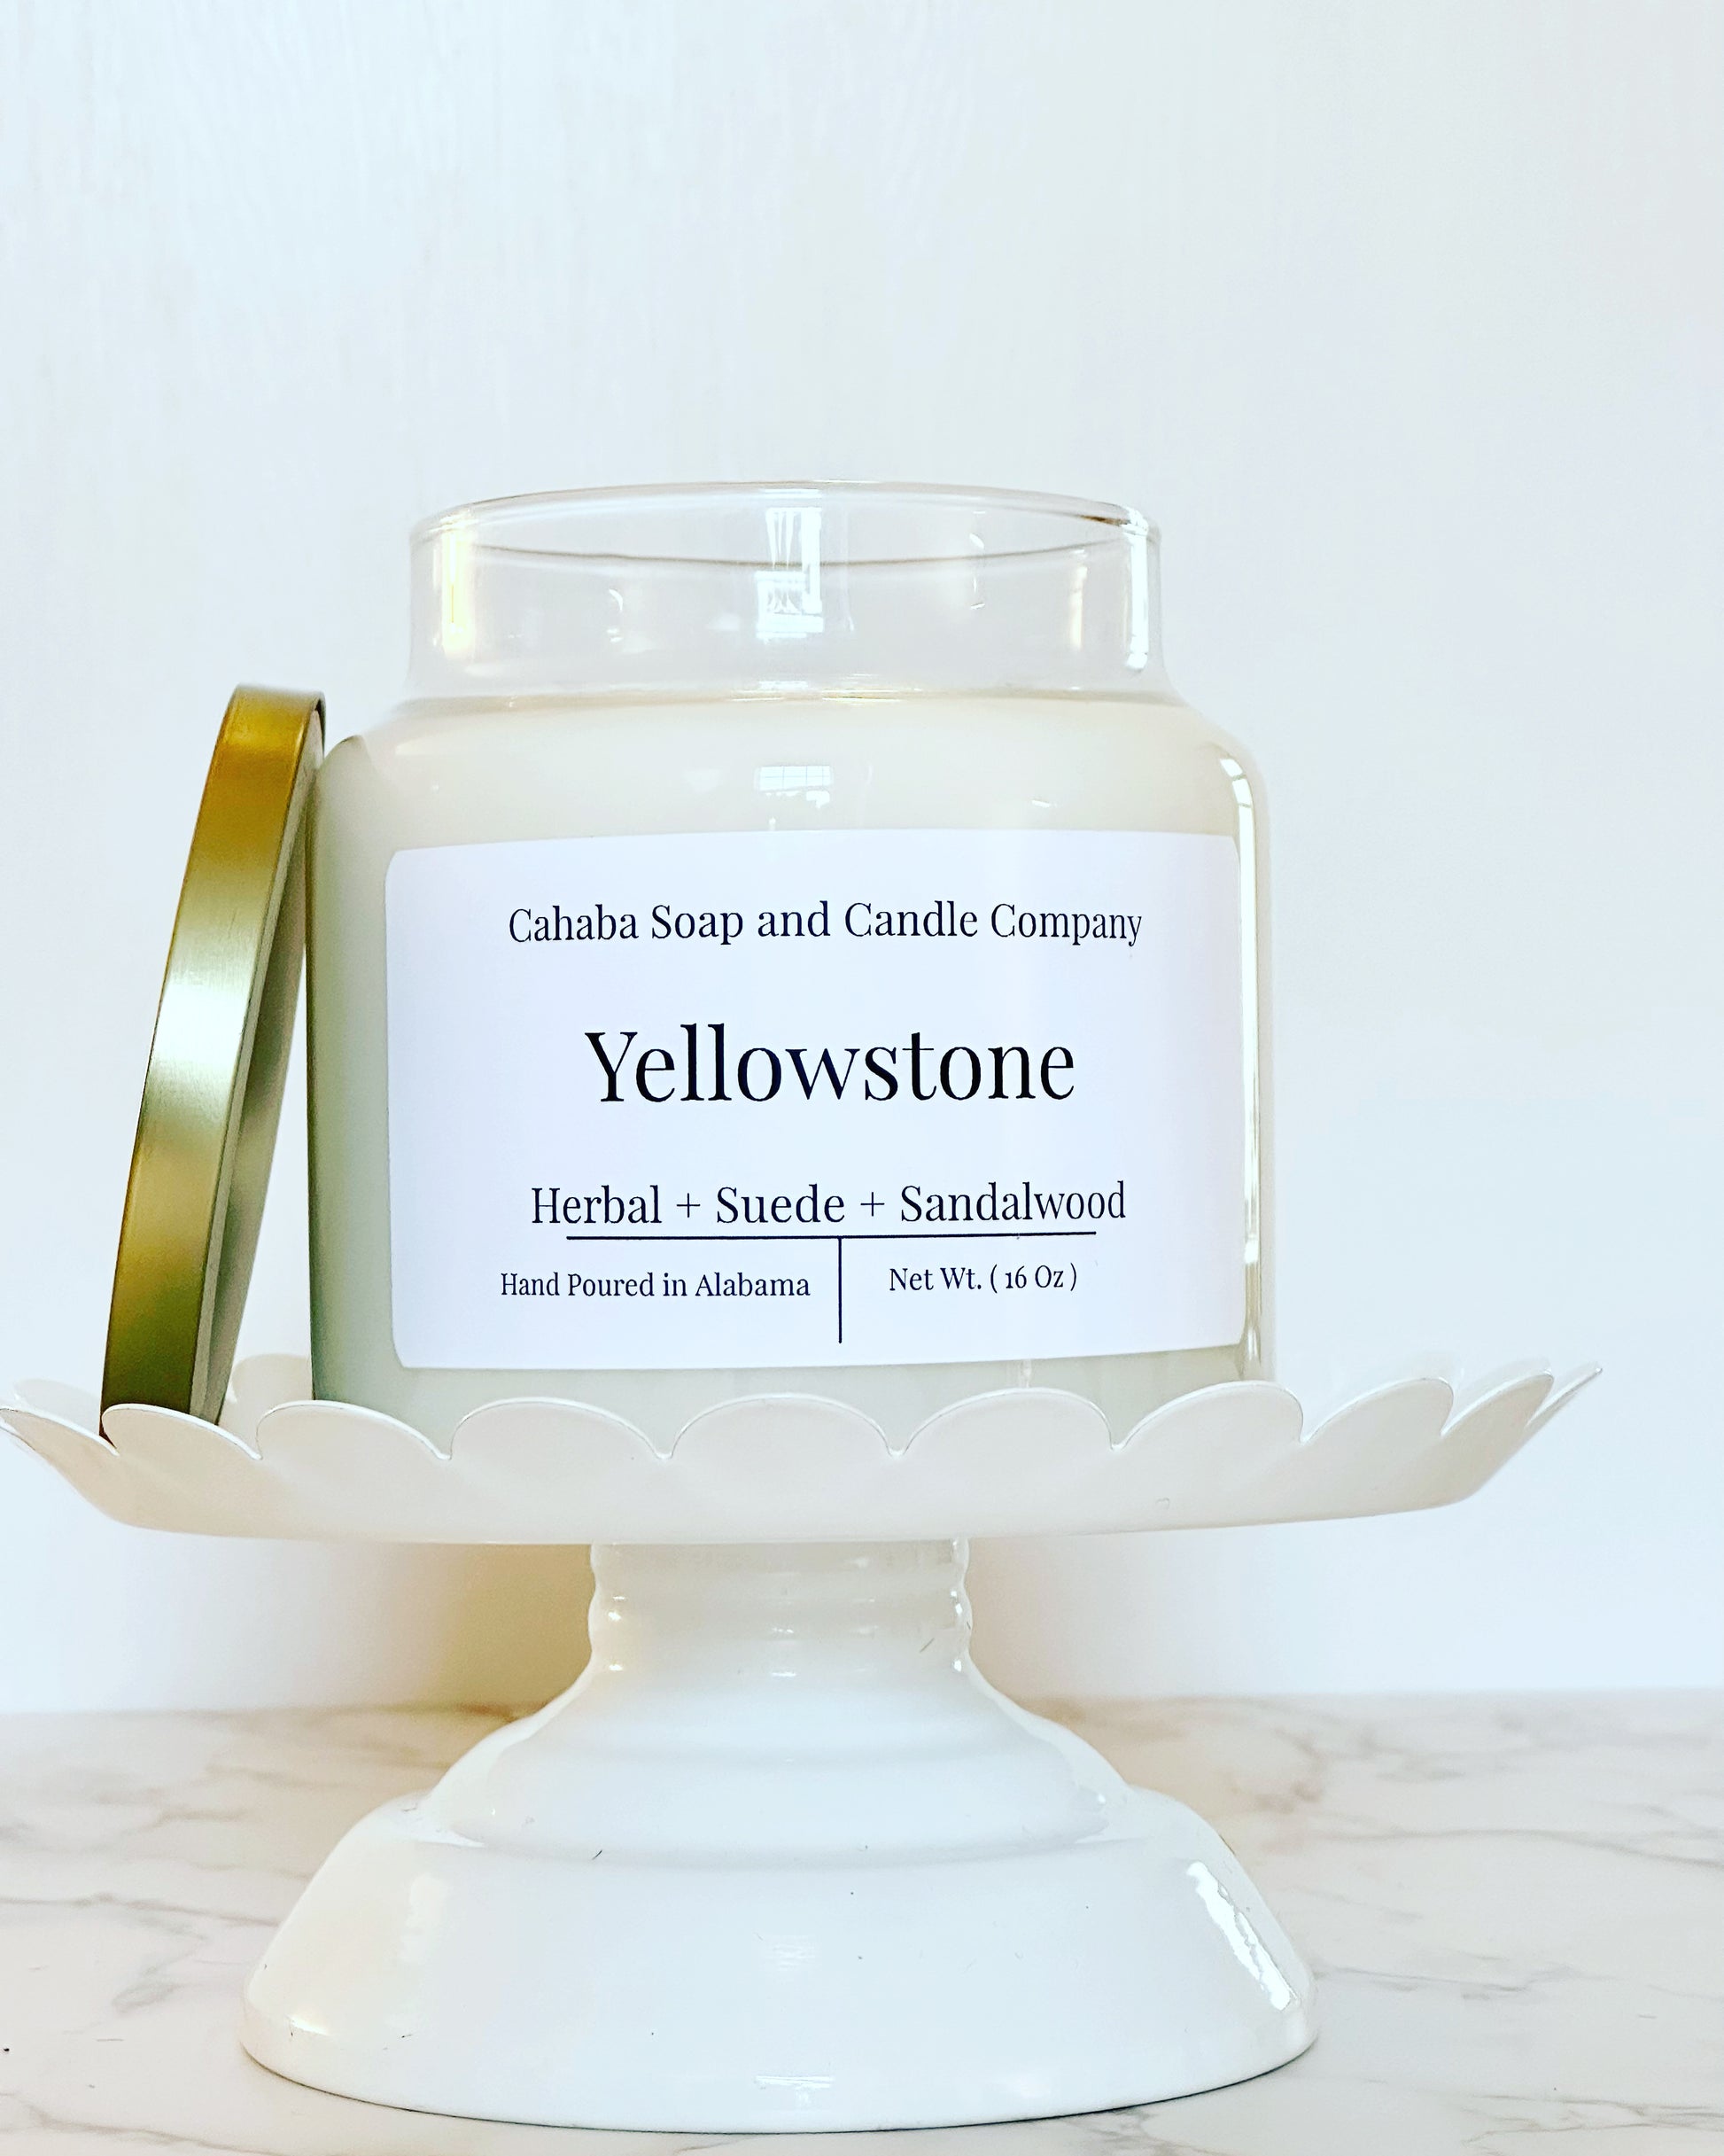 Yellowstone - Cahaba Soap and Candle Company